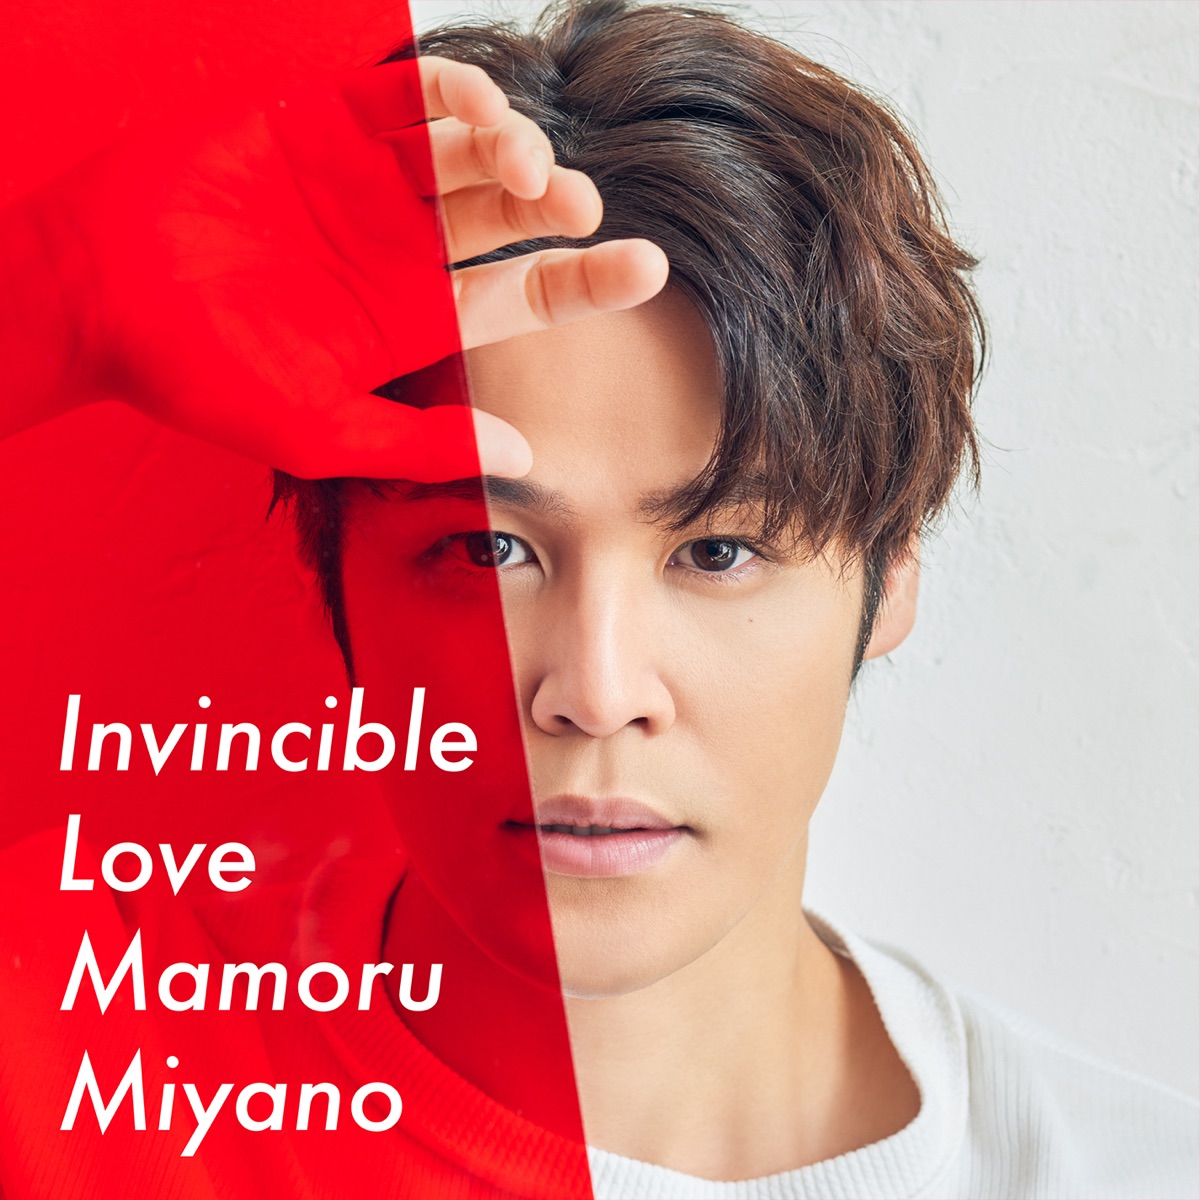 Cover art for『Mamoru Miyano - Invincible Love』from the release『Invincible Love